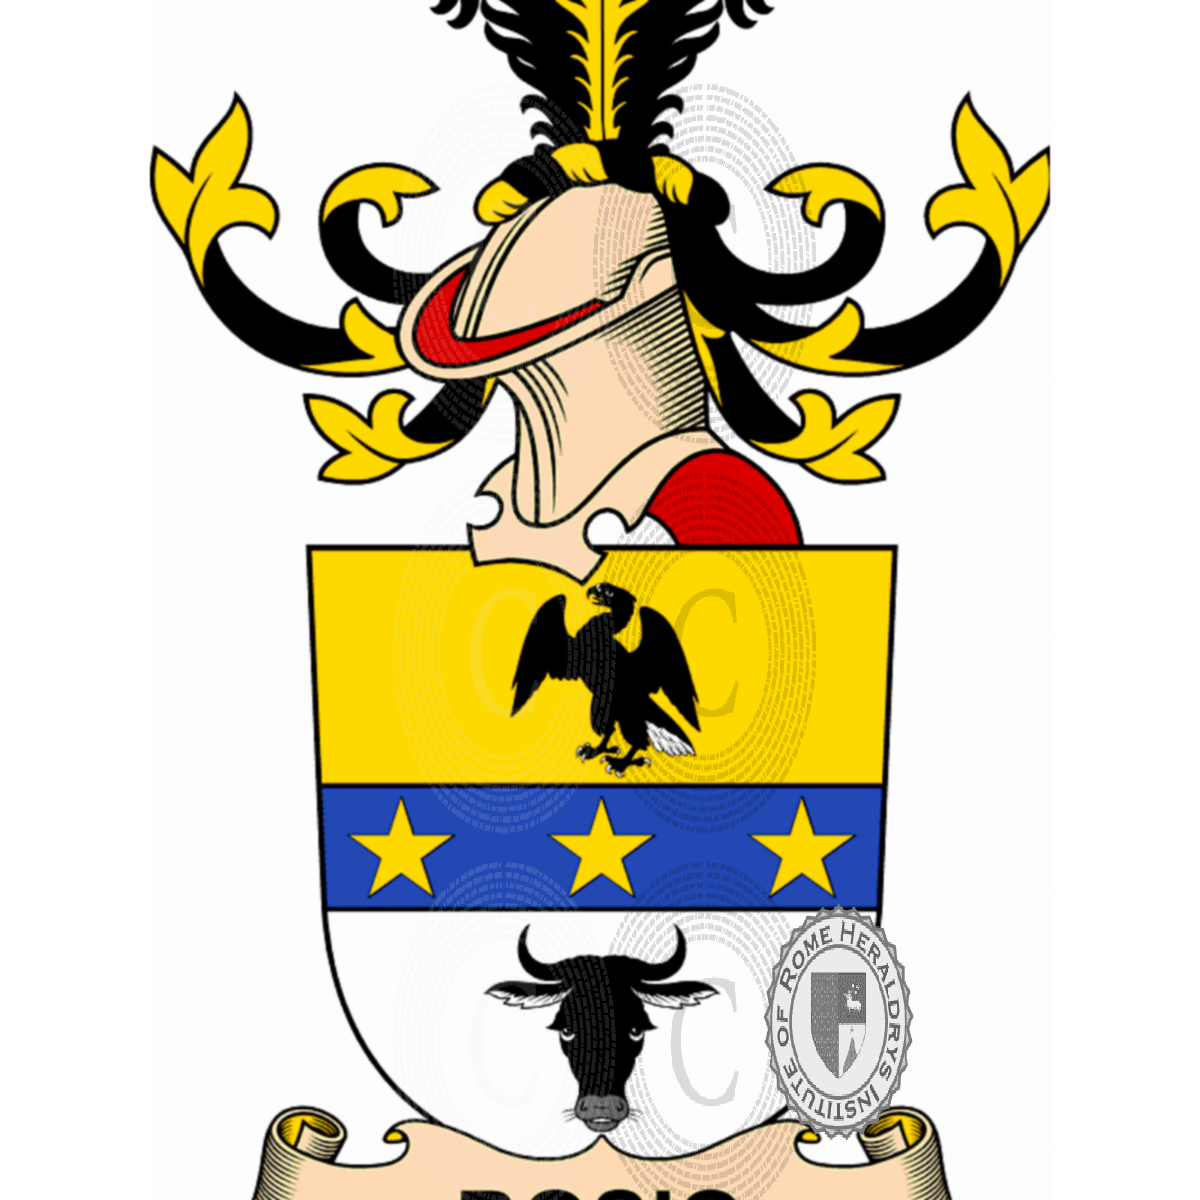 Coat of arms of familyBosio